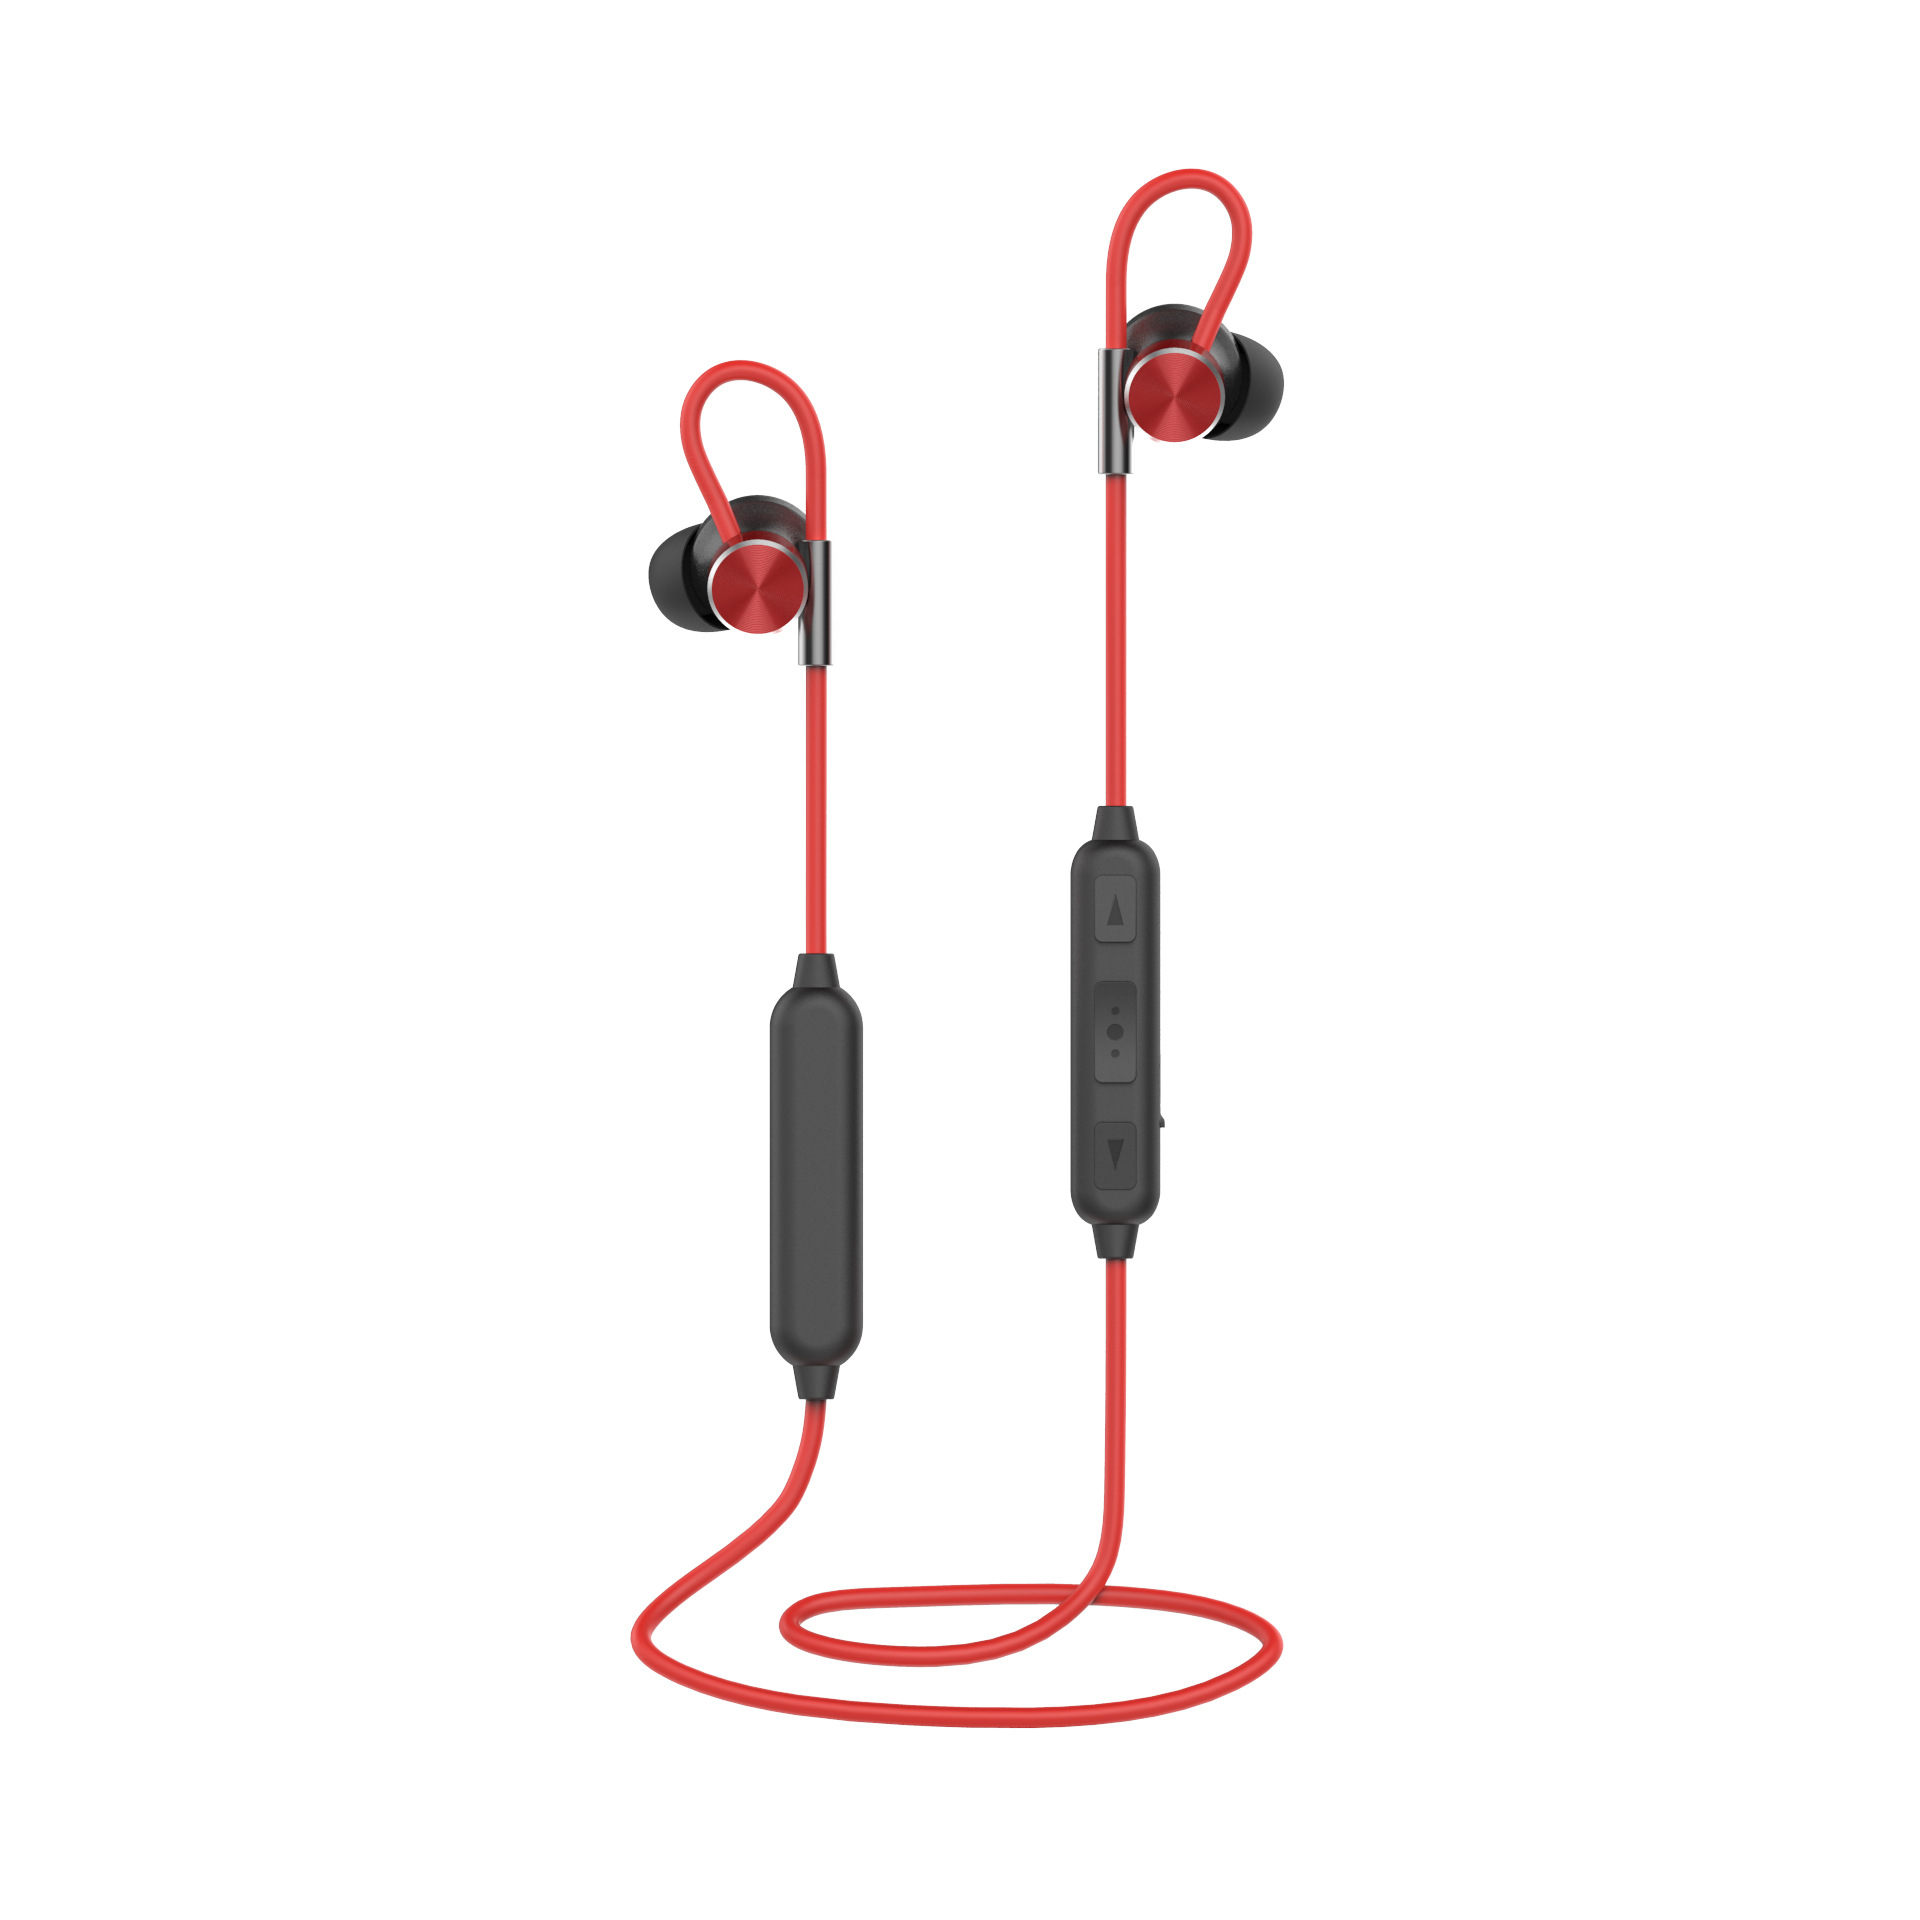 Waterproof Sweat proof Wireless Sports Bluetooth Stereo Headset S91 (Red)